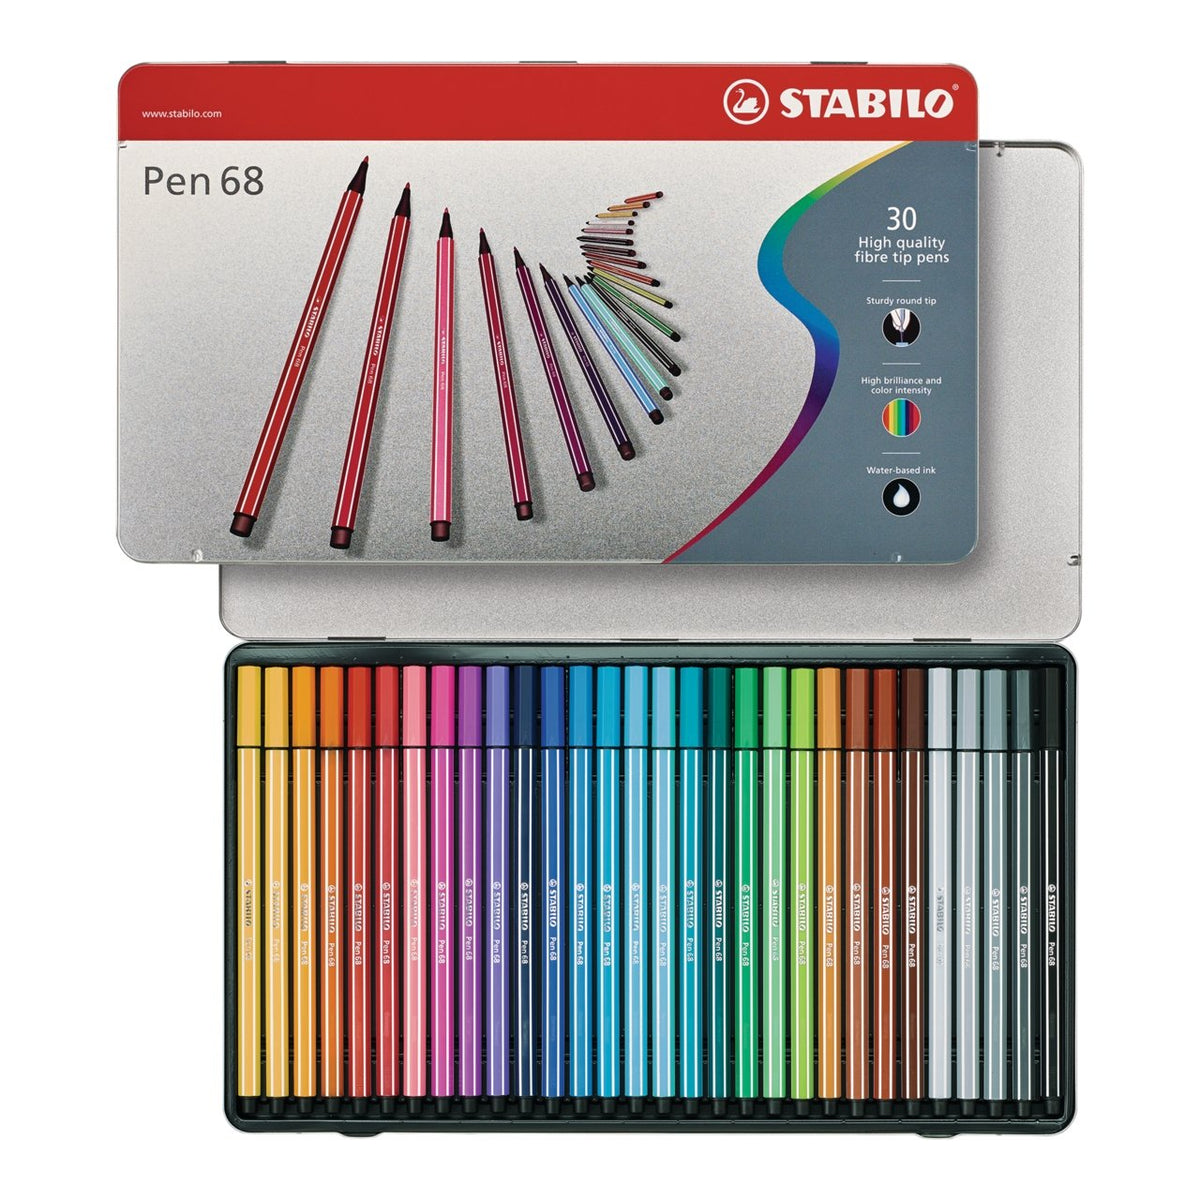 STABILO Pen 68 feutre, boîte métallique de 10 stiften en couleurs assorties